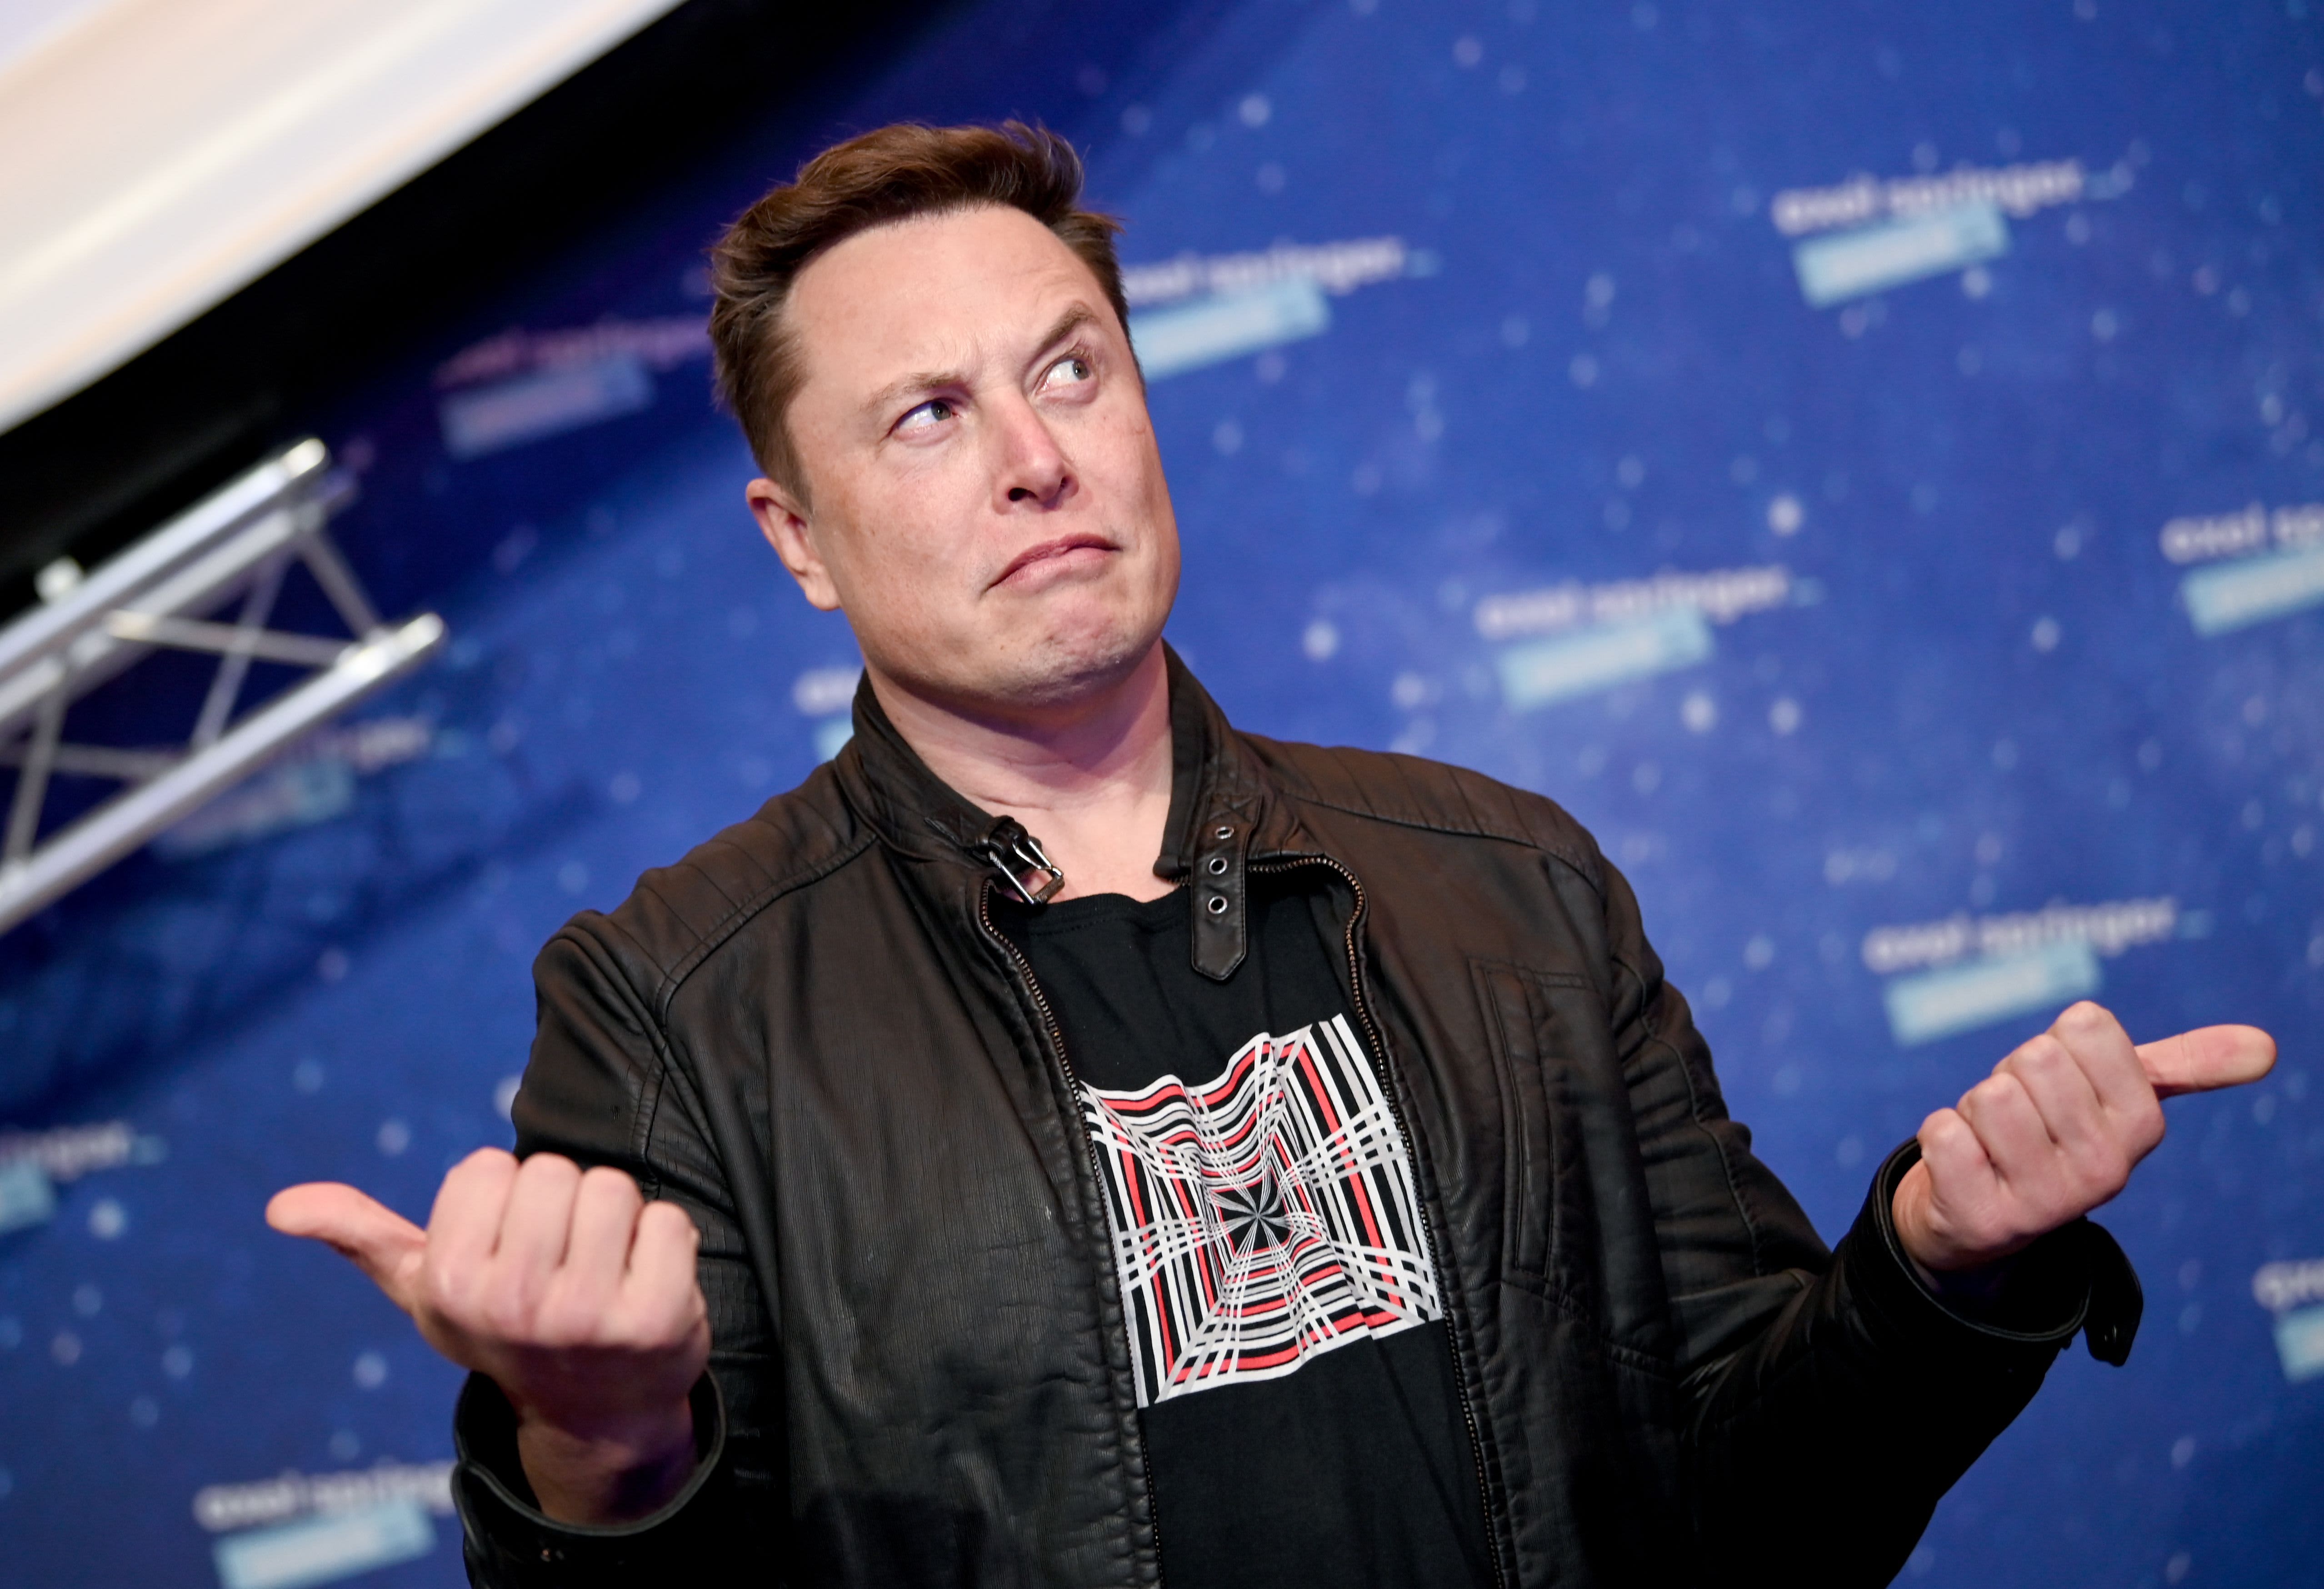 Elon Musk offers to sell his tweet as an NFT